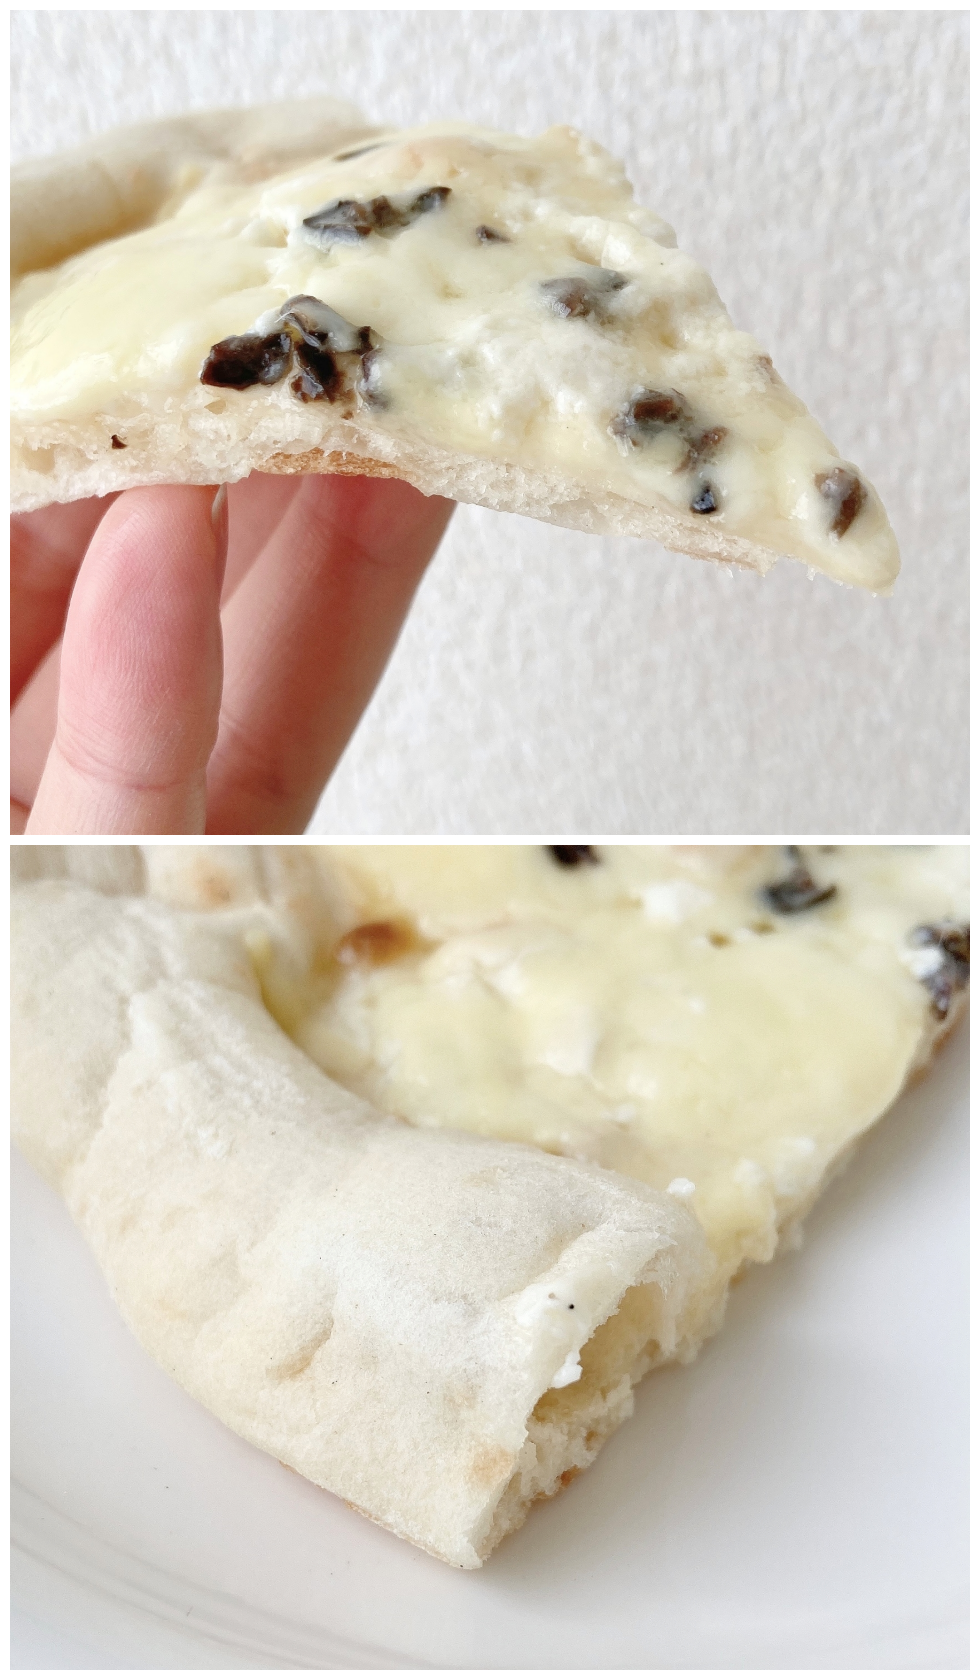 SEIYU（西友）のオススメのピザ「もっちり発酵生地を楽しむ ピッツァ トリュフ香る 5種のチーズ 1枚」